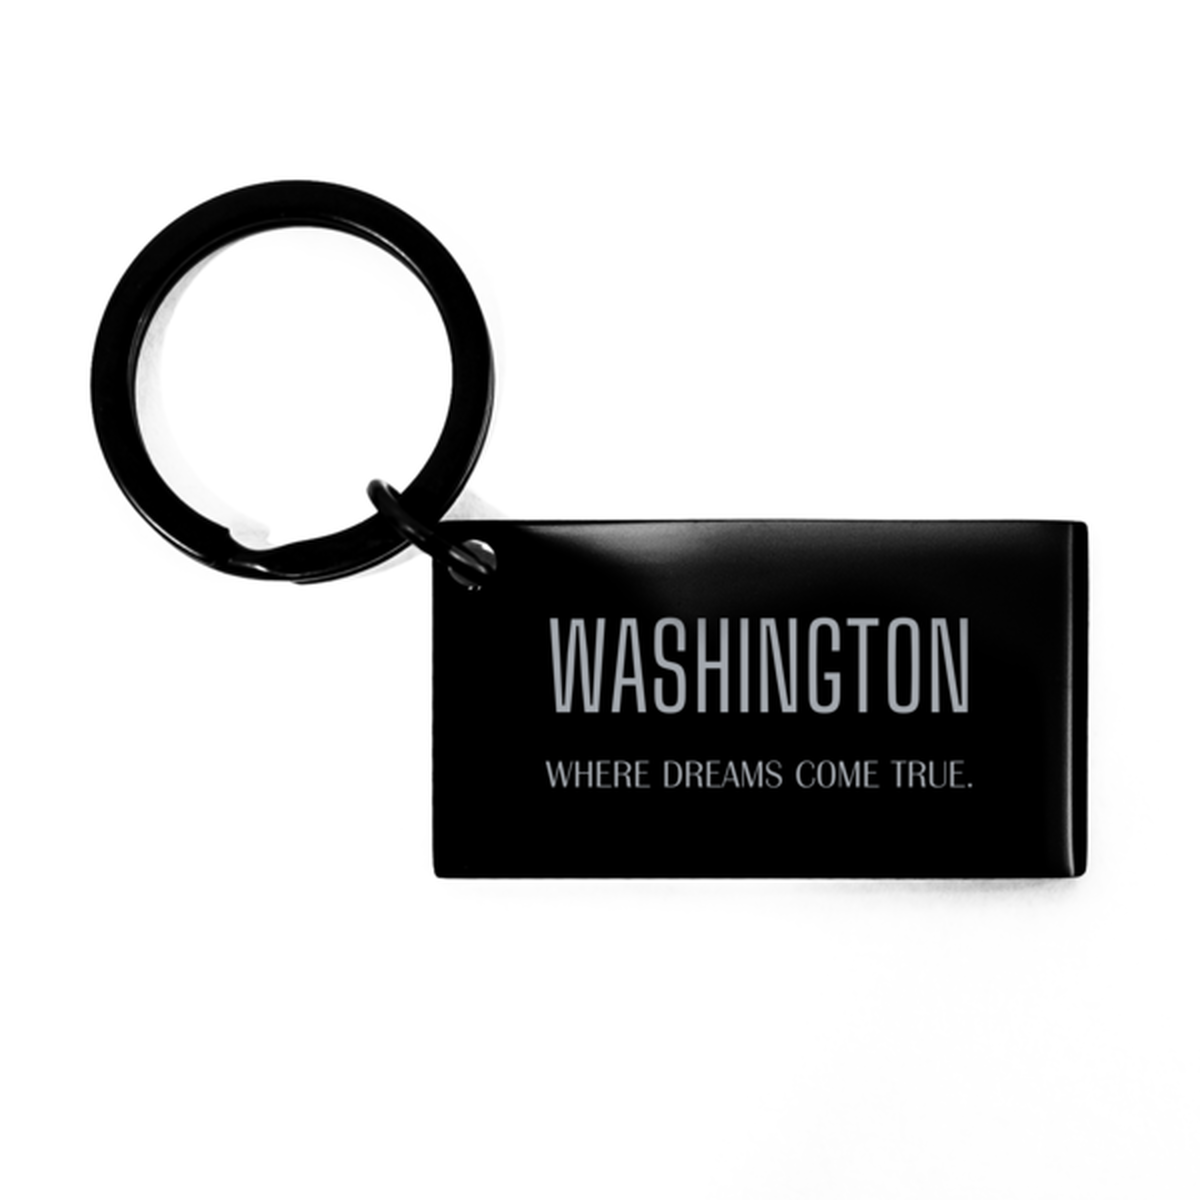 Love Washington State Keychain, Washington Where dreams come true, Birthday Inspirational Gifts For Washington Men, Women, Friends